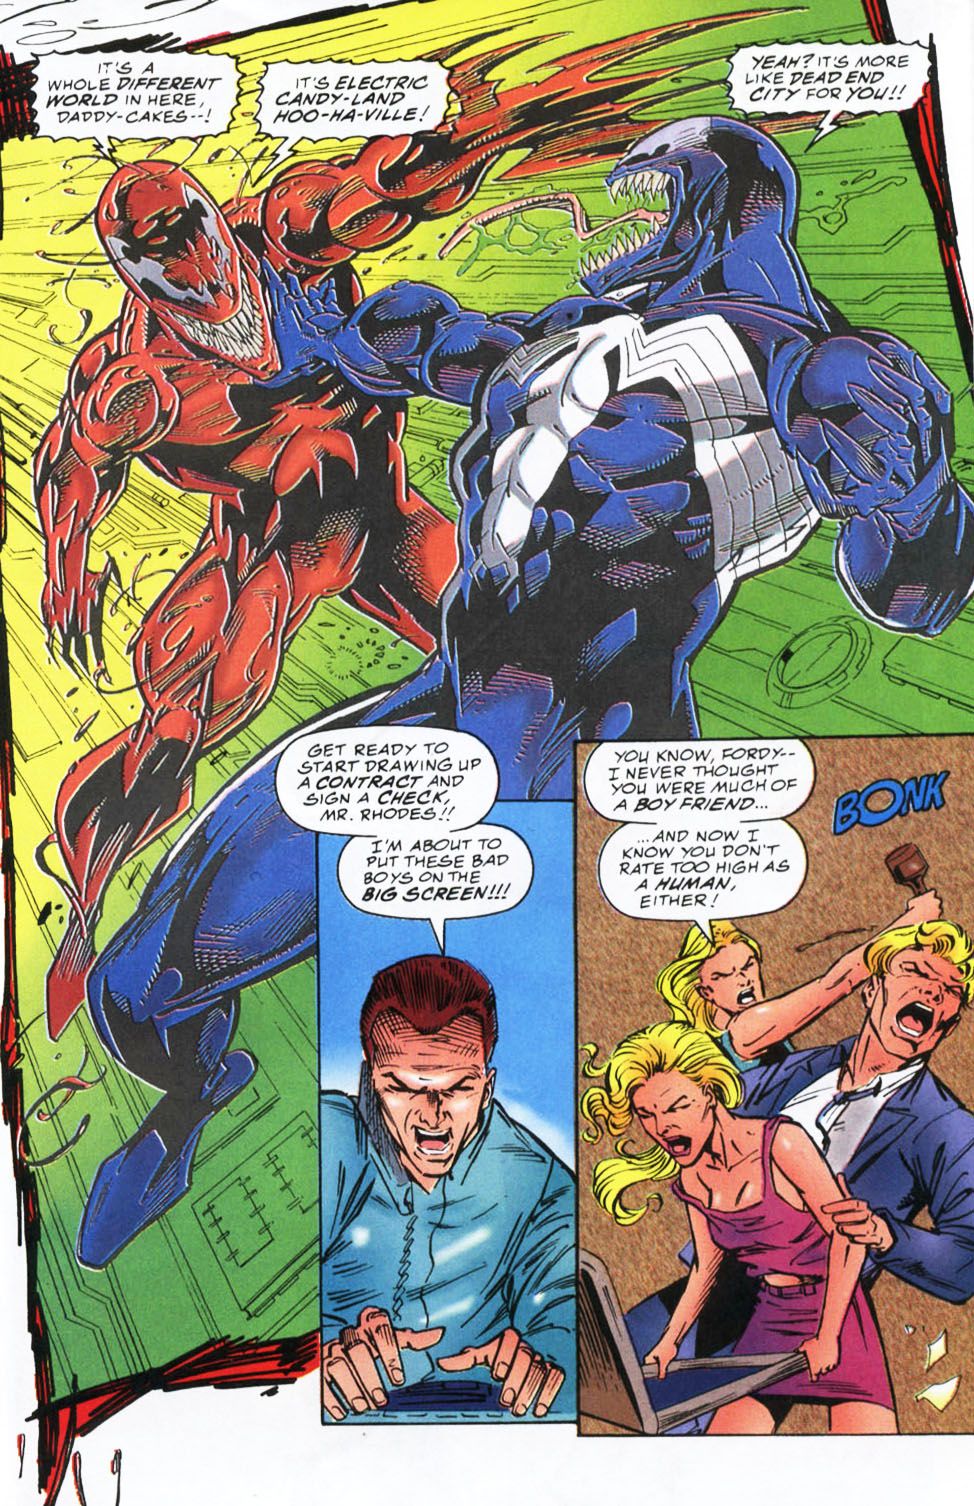 Venom ingresa a Internet para luchar contra Carnage